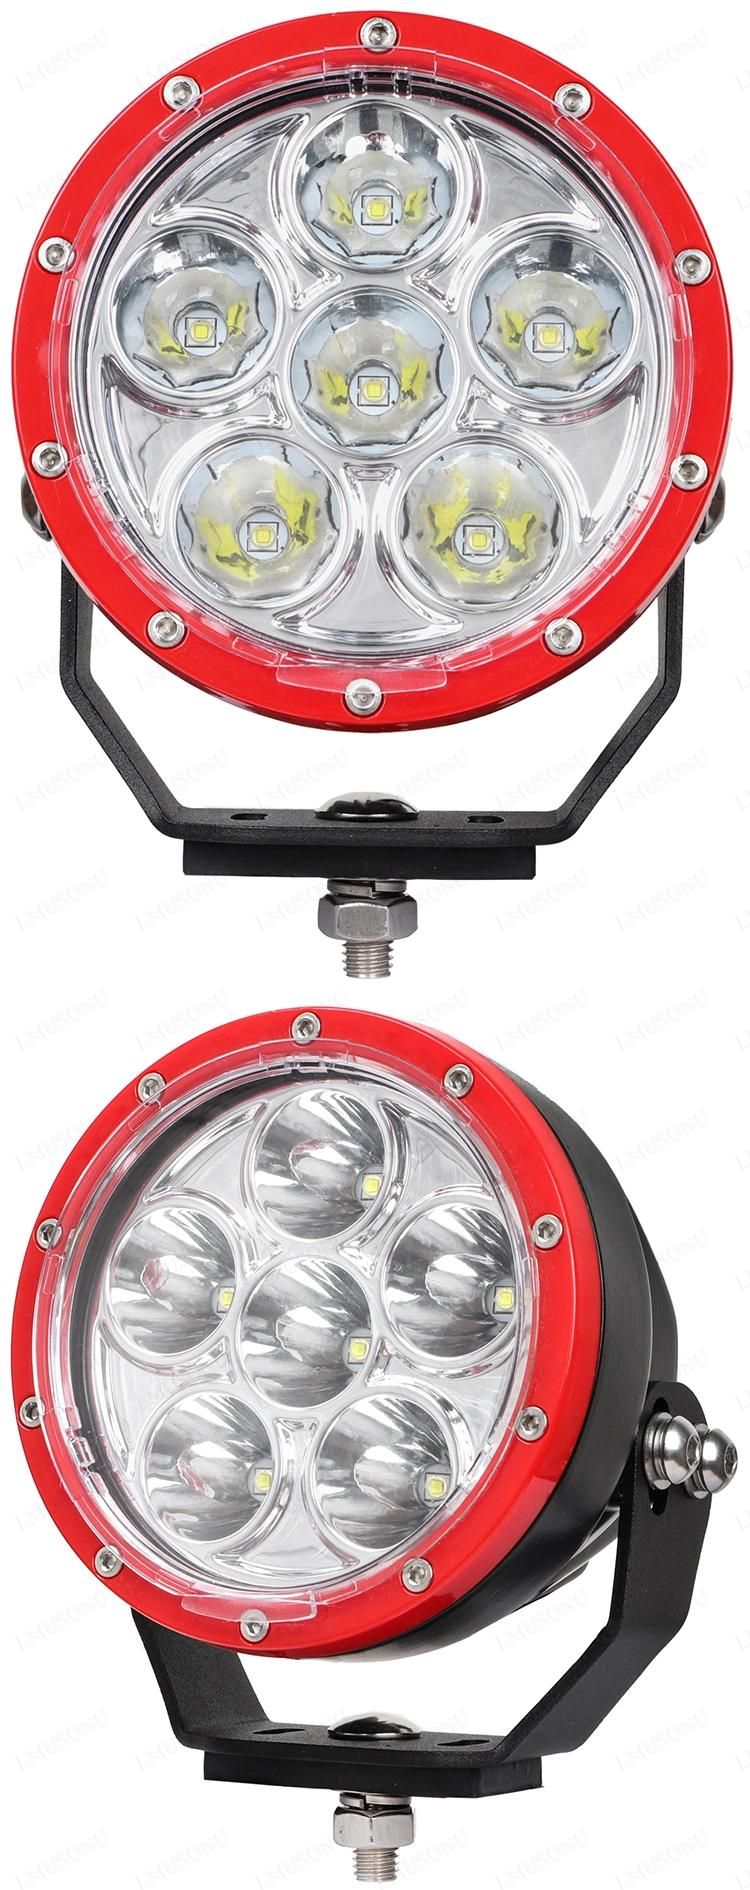 5.0 Inch 60W Round 4X4 LED Driving Light Lattice Power 4WD SUV ATV Offroad Lamp